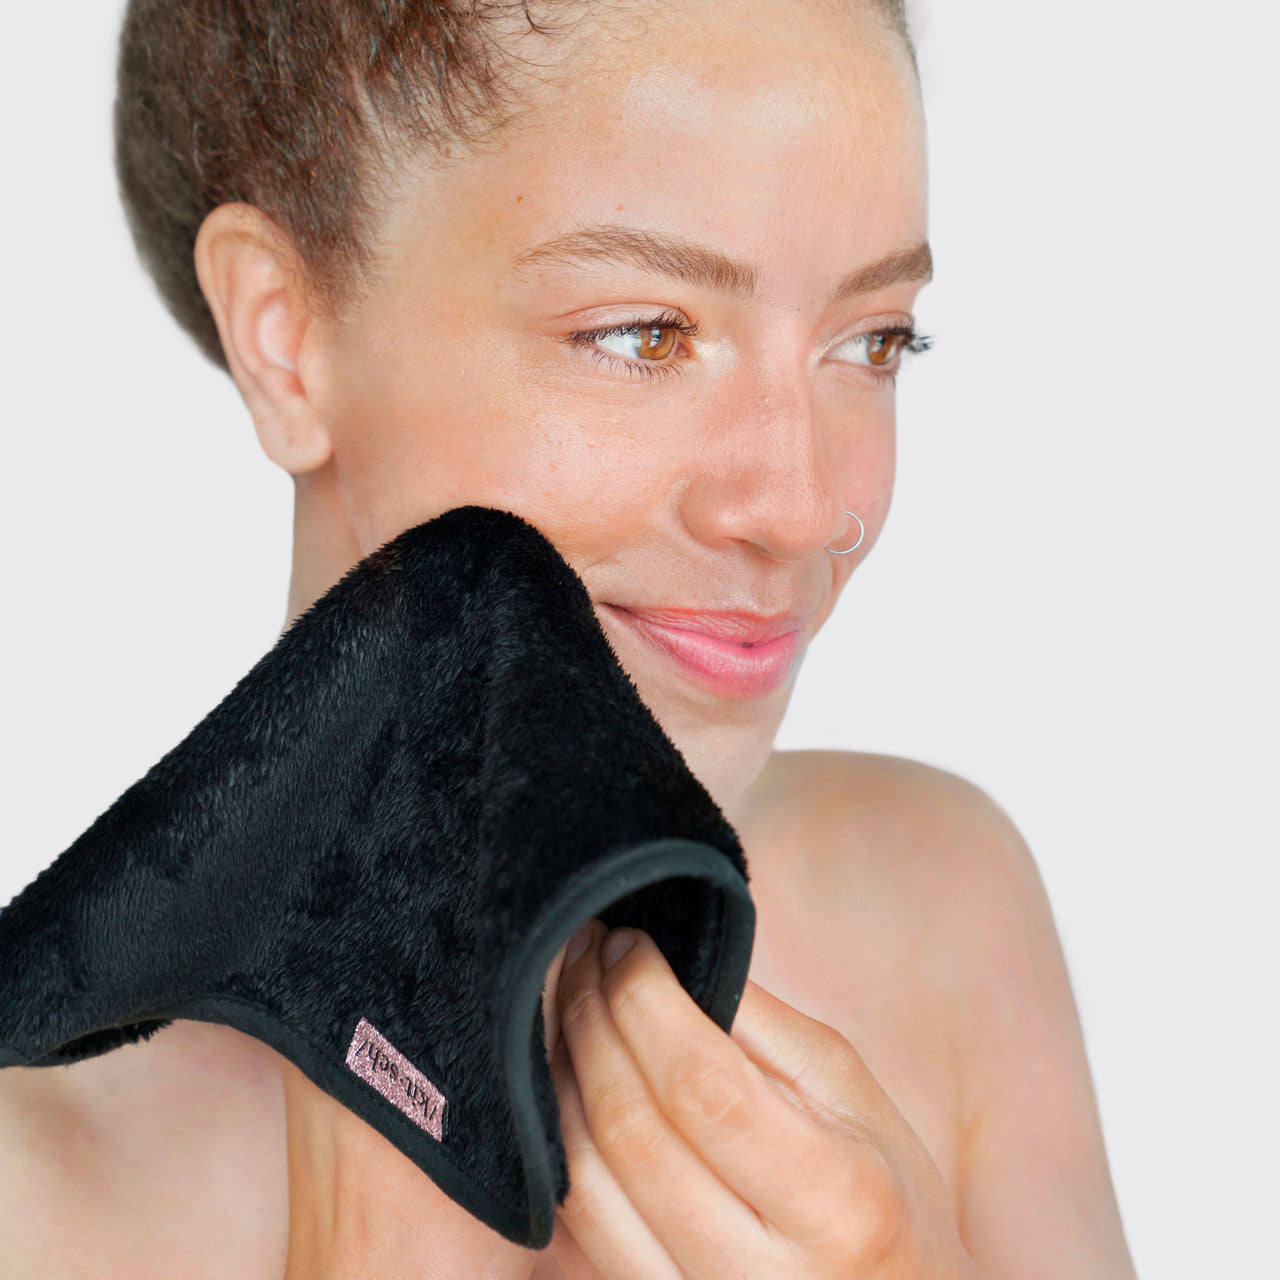 Ultra-Soft Microfiber Makeup Removing Towels